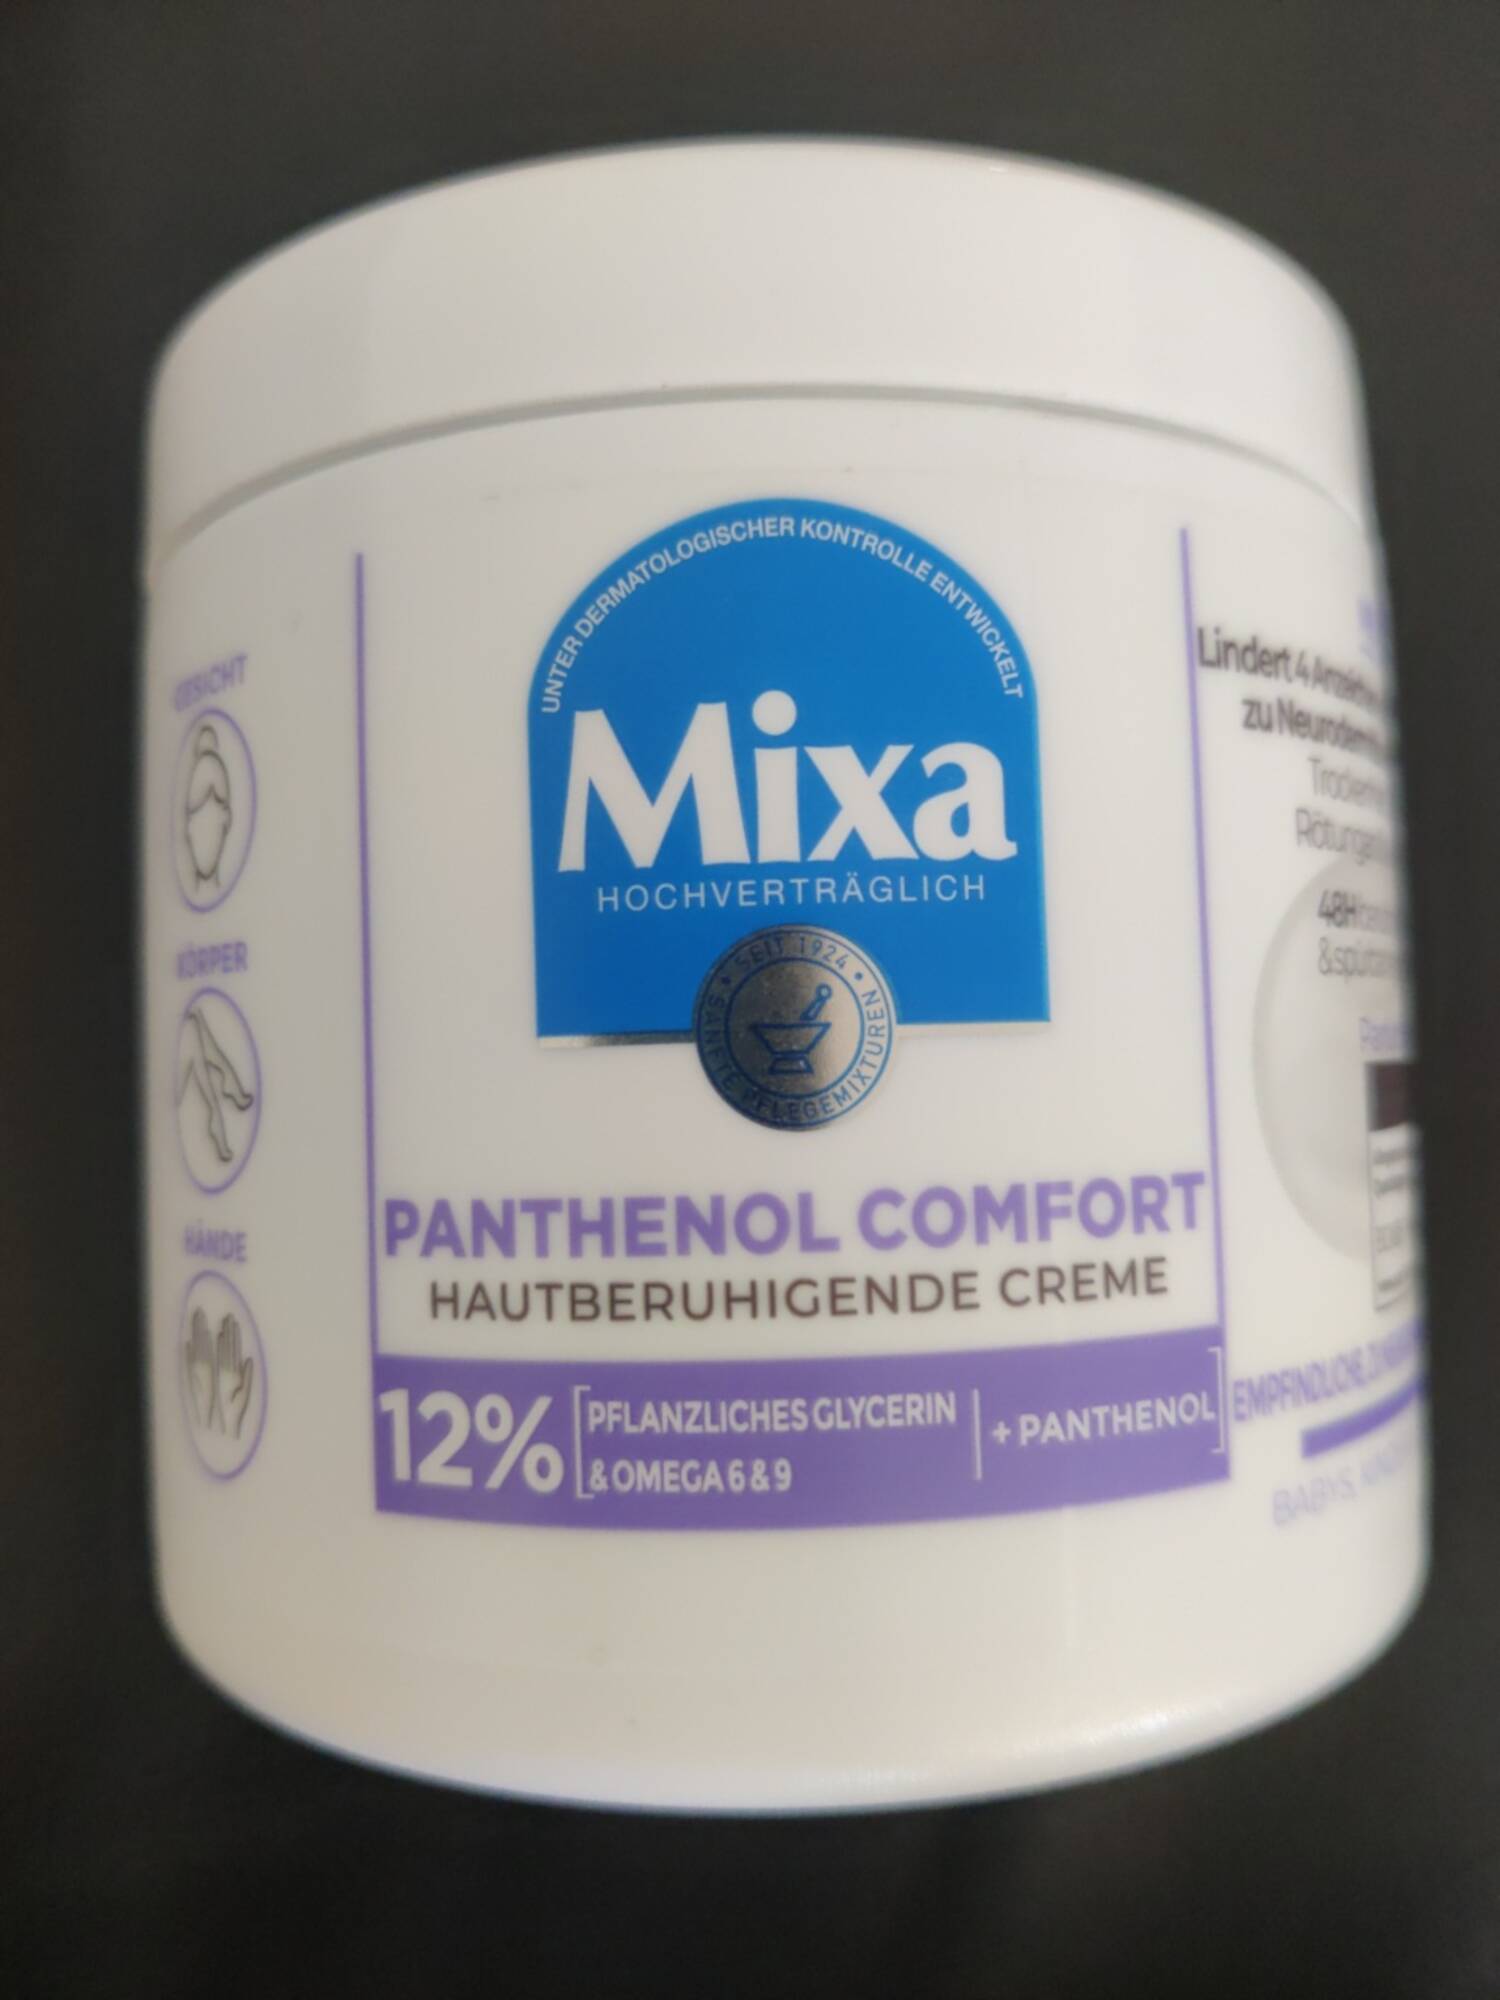 MIXA - Panthenol comfort - Hautberuhigende creme